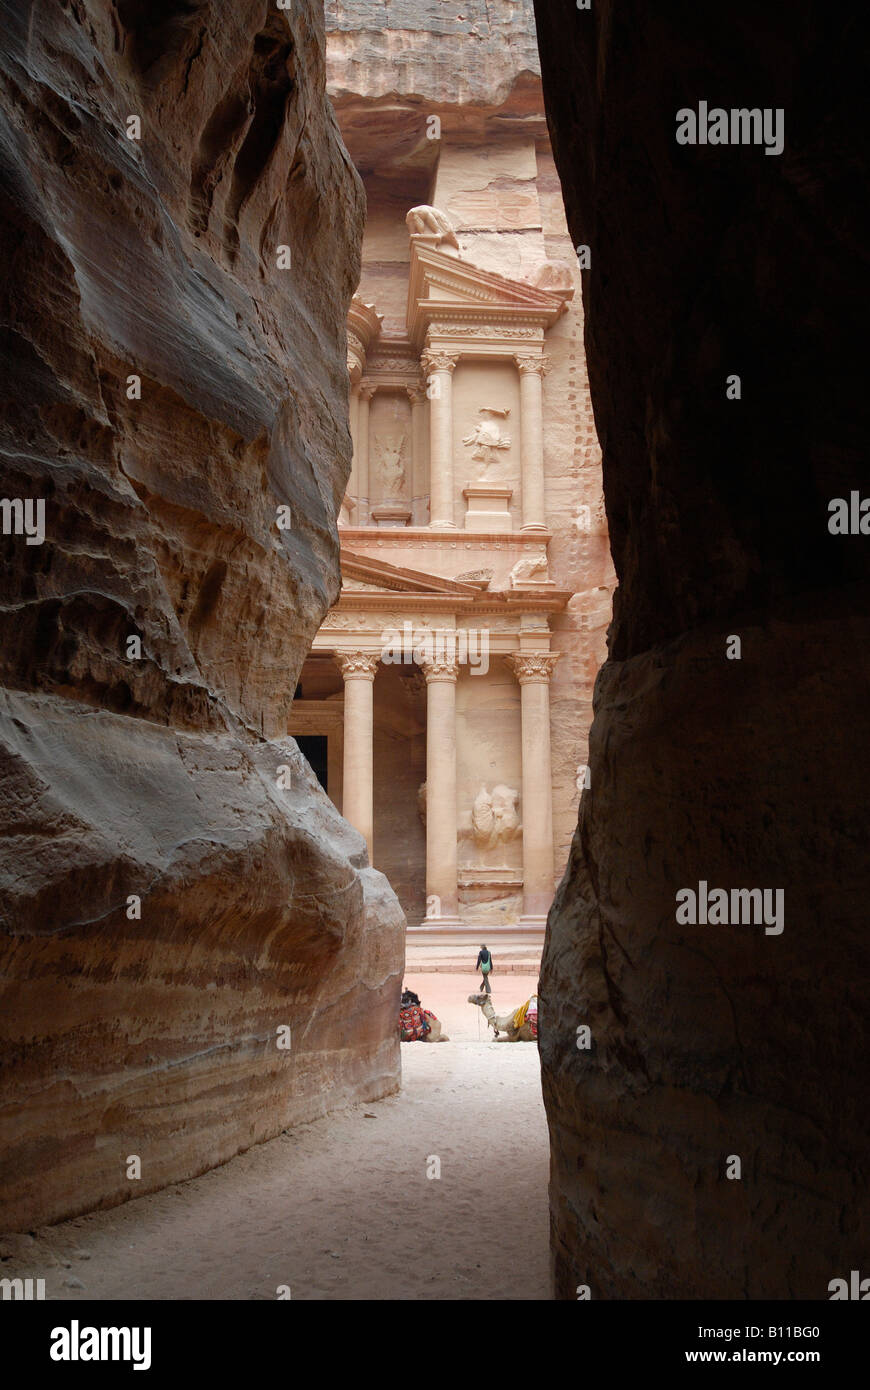 view from canyon As Siq to AL KHAZNEH TREASURY Nabataean ancient town Petra Jordan Arabia Stock Photo